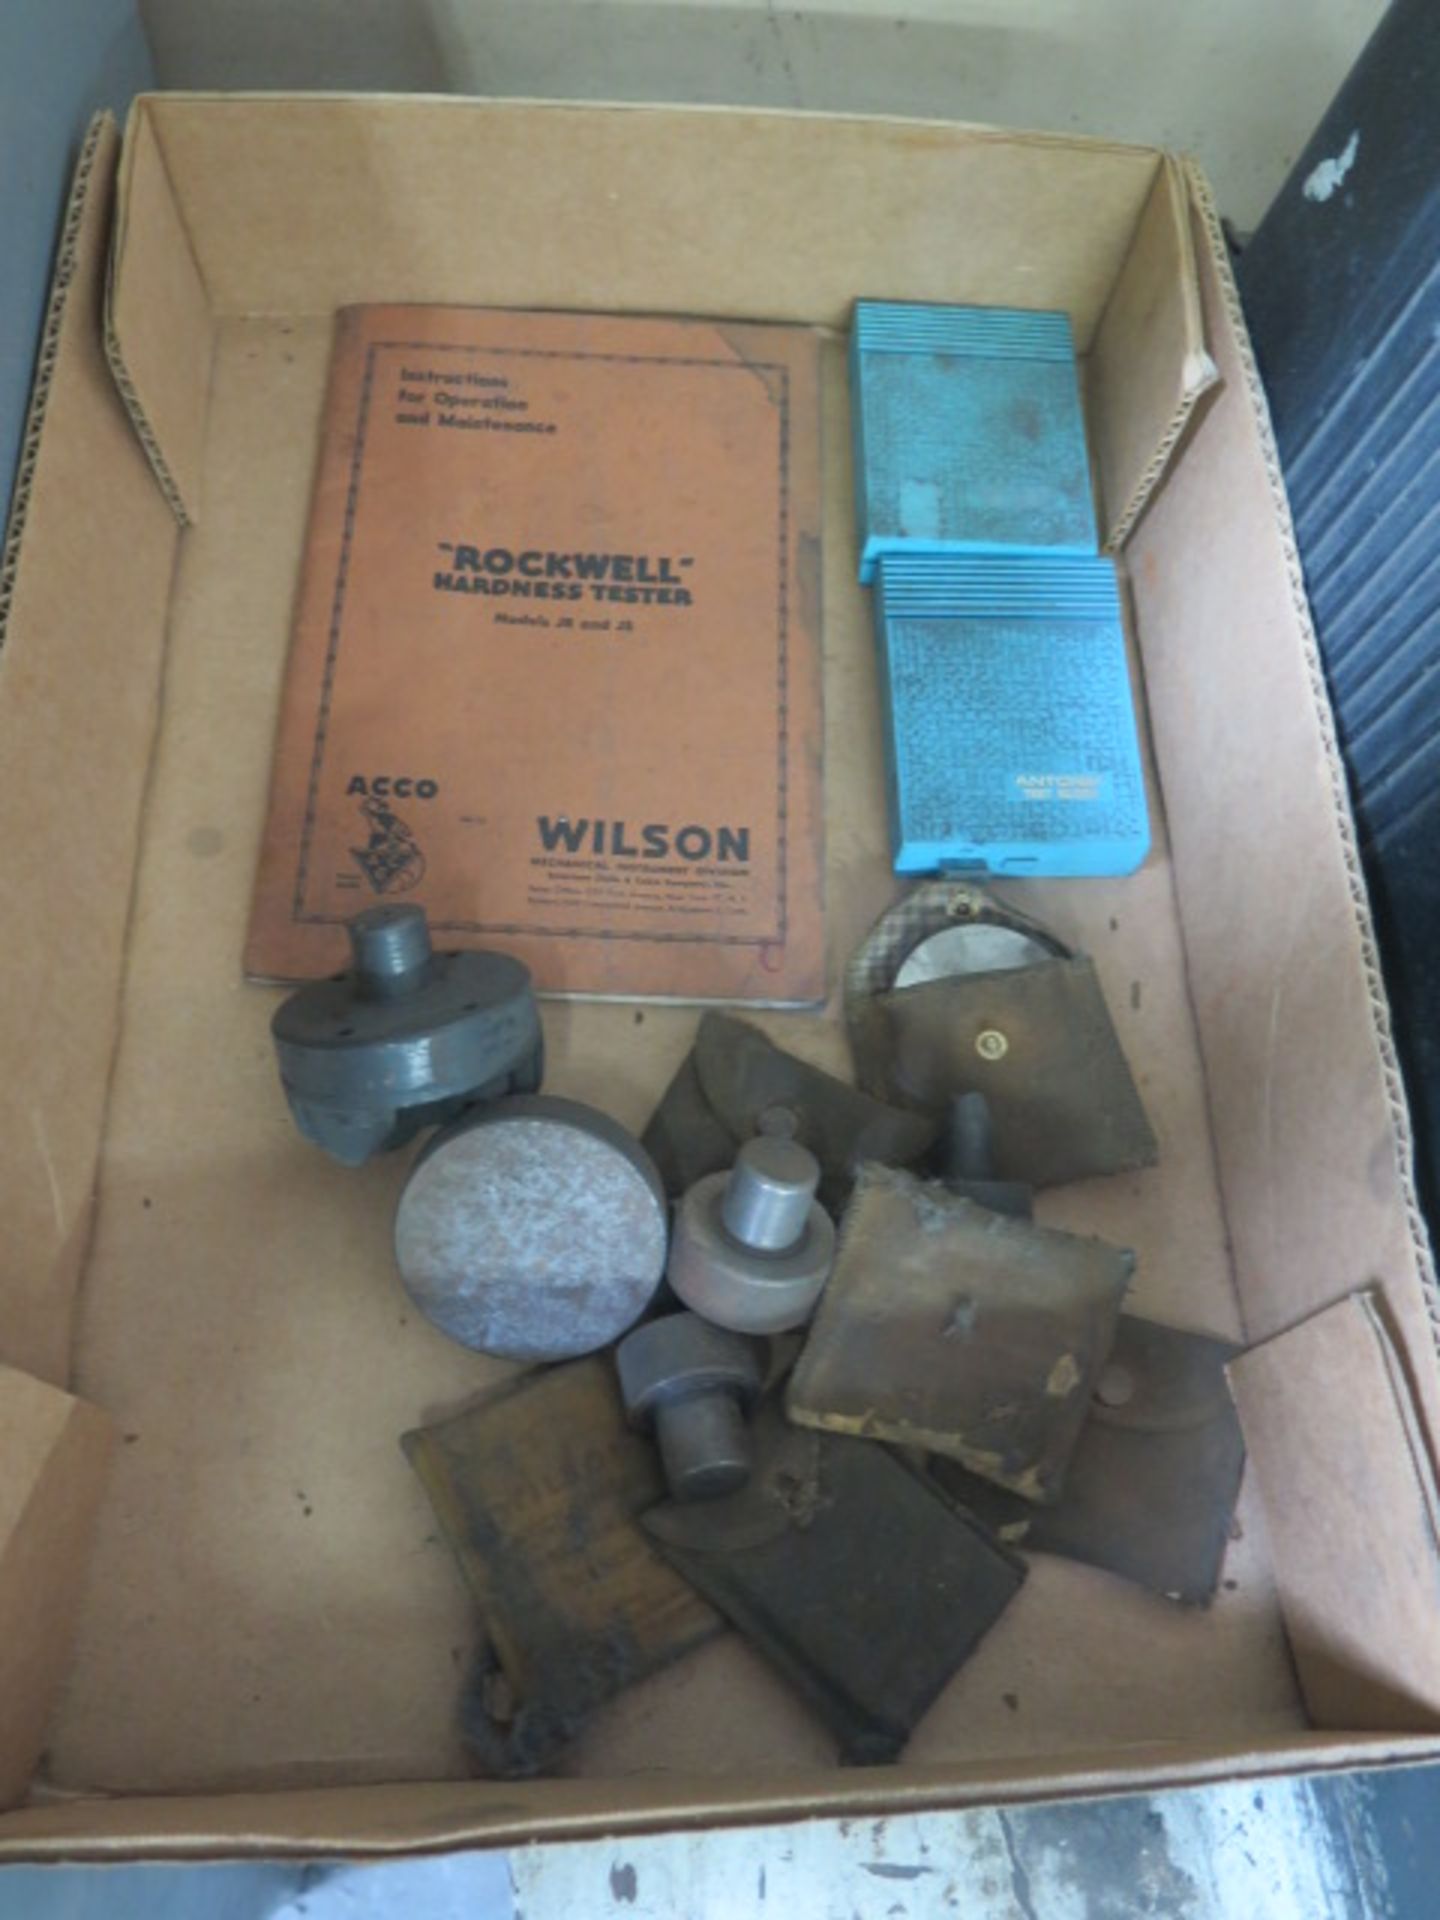 Wilson mdl. 4JR Rockwell Hardness Tester s/n 5246 - Image 5 of 7